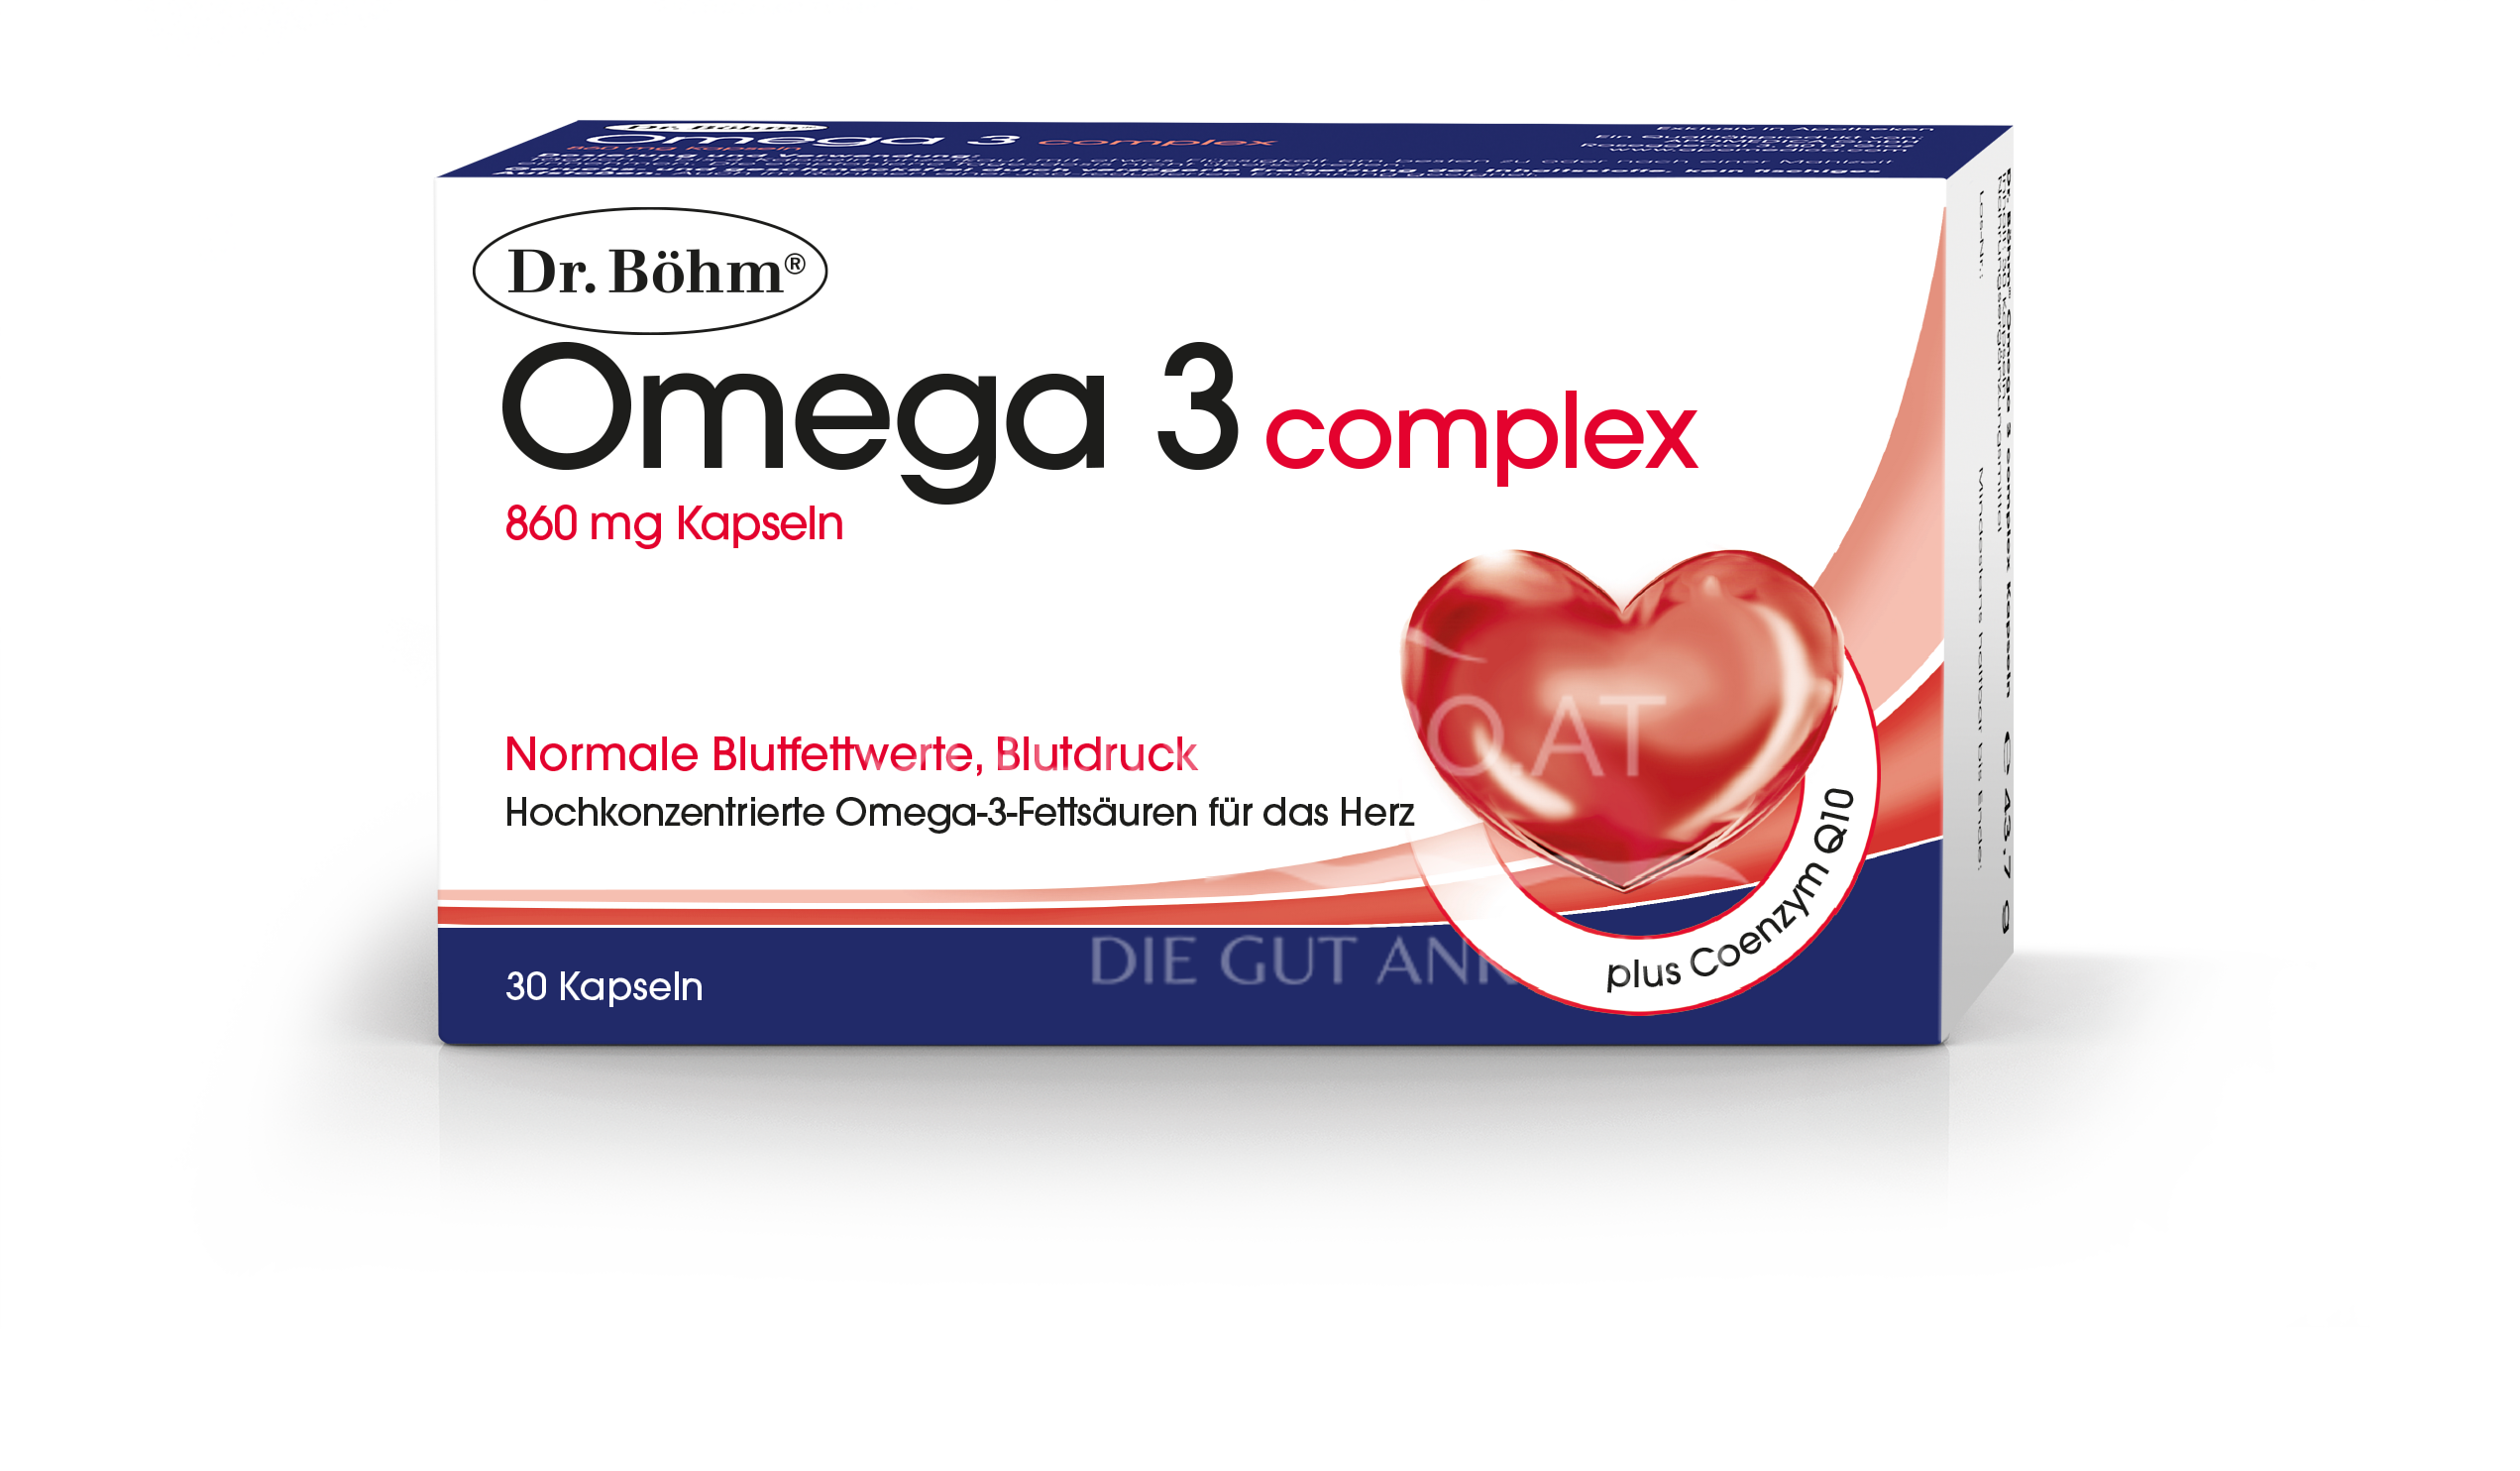 Dr. Böhm® Omega 3 complex 860 mg Kapseln